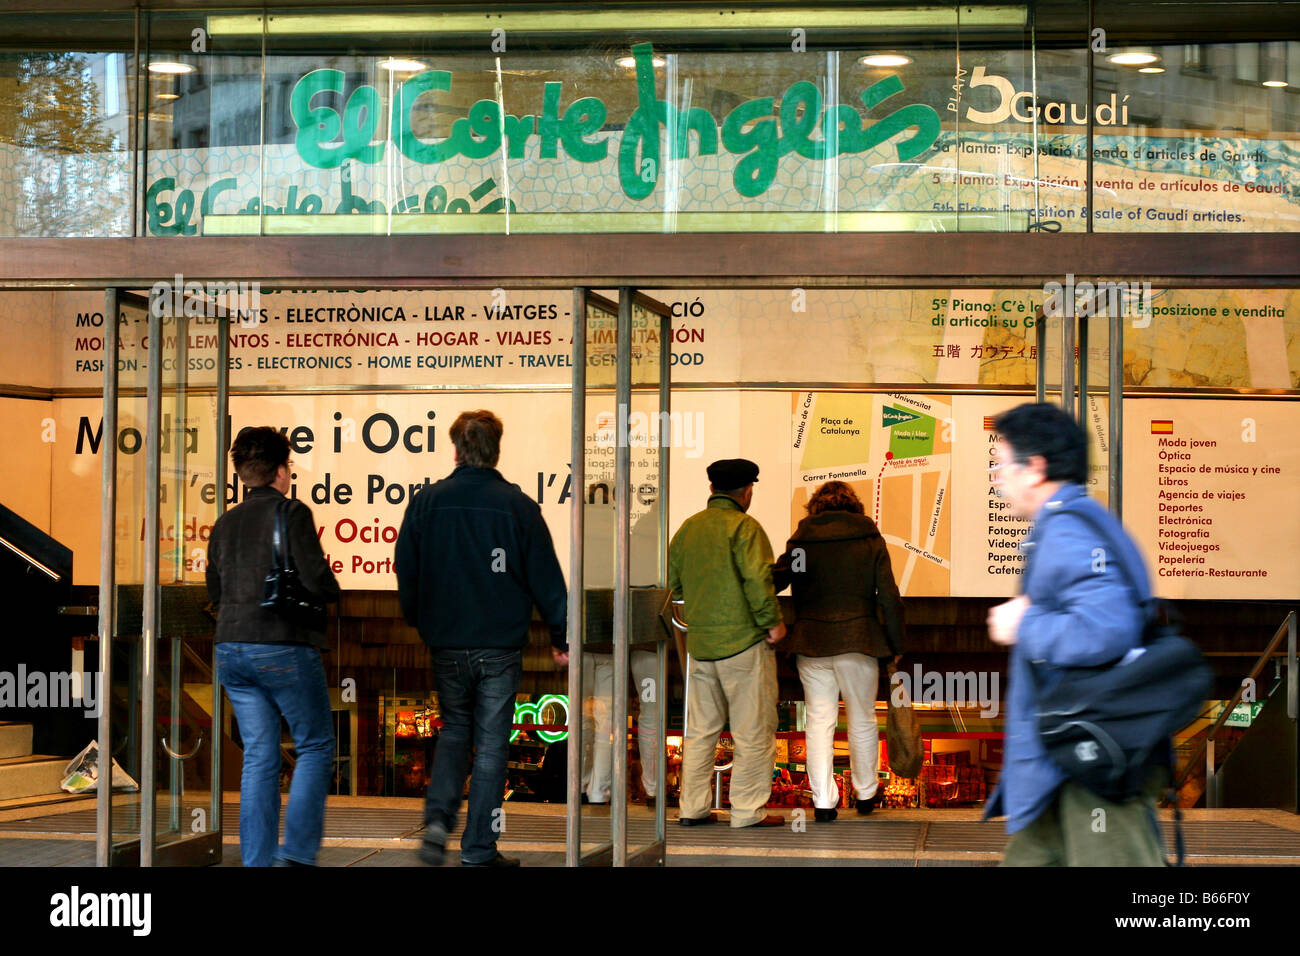 el corte ingles, the spanish department store, in plaza catalunya, barcelona, spain Stock Photo